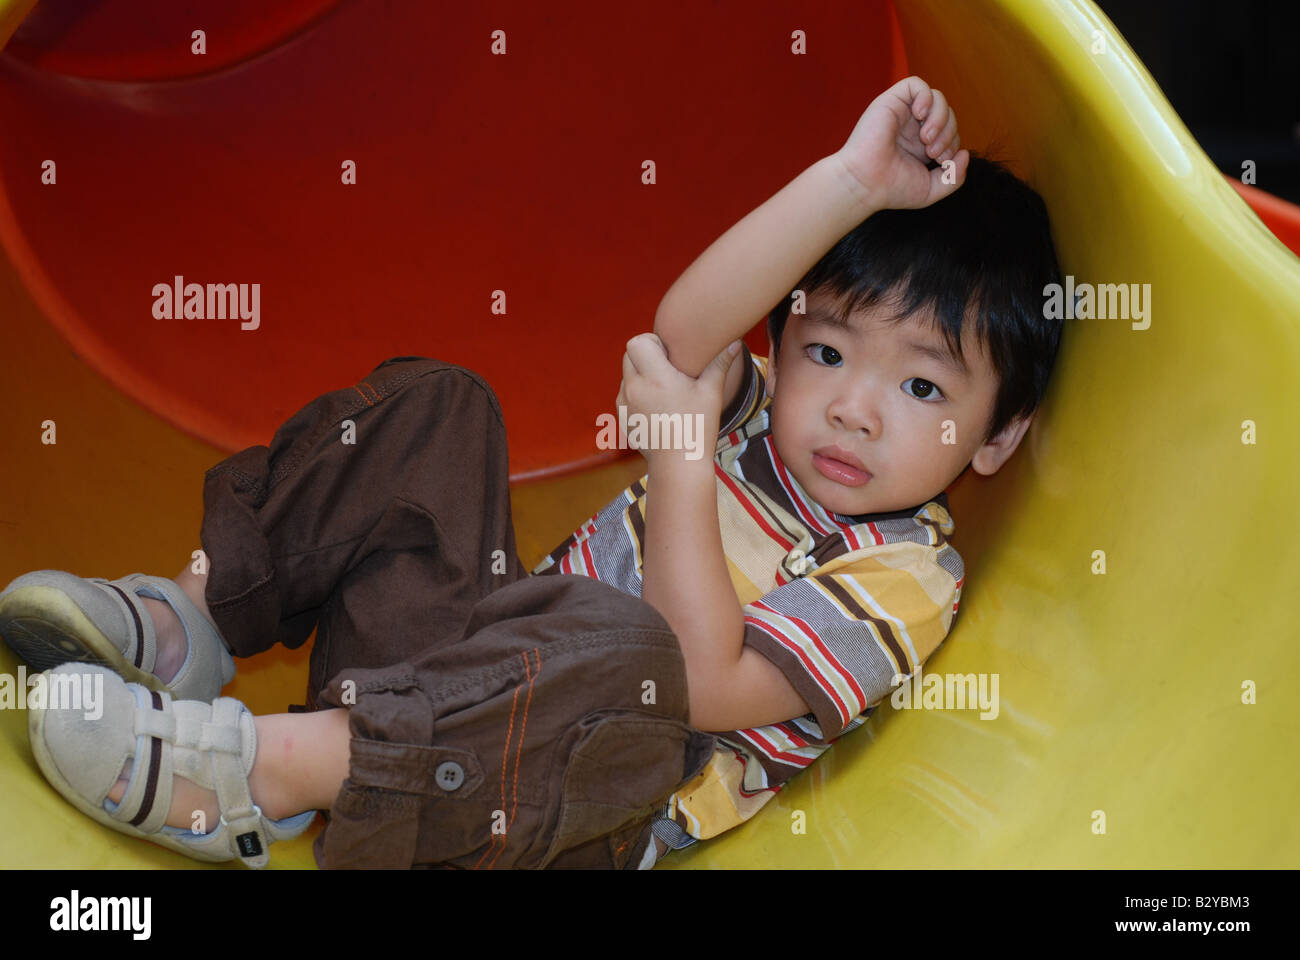 Chinese boy sitting on slide in playground Stock Photo - Alamy